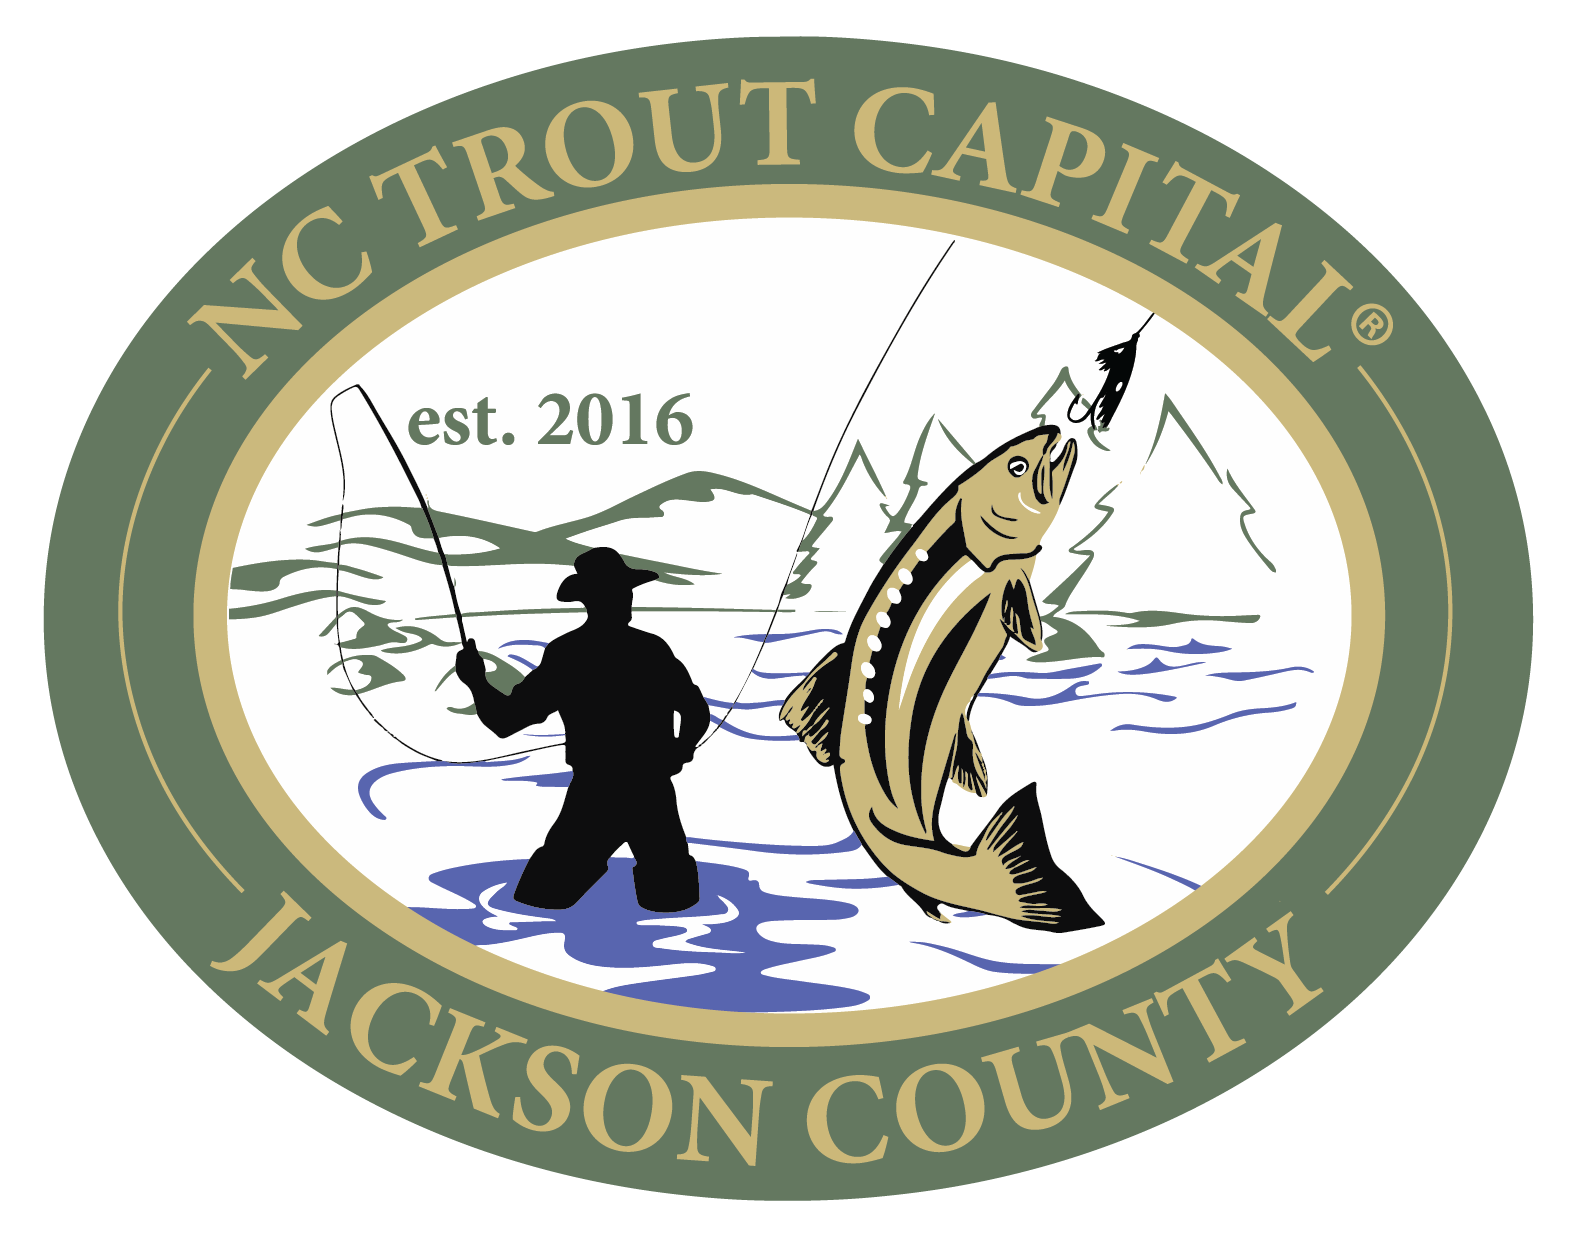 NC trout Capital logo